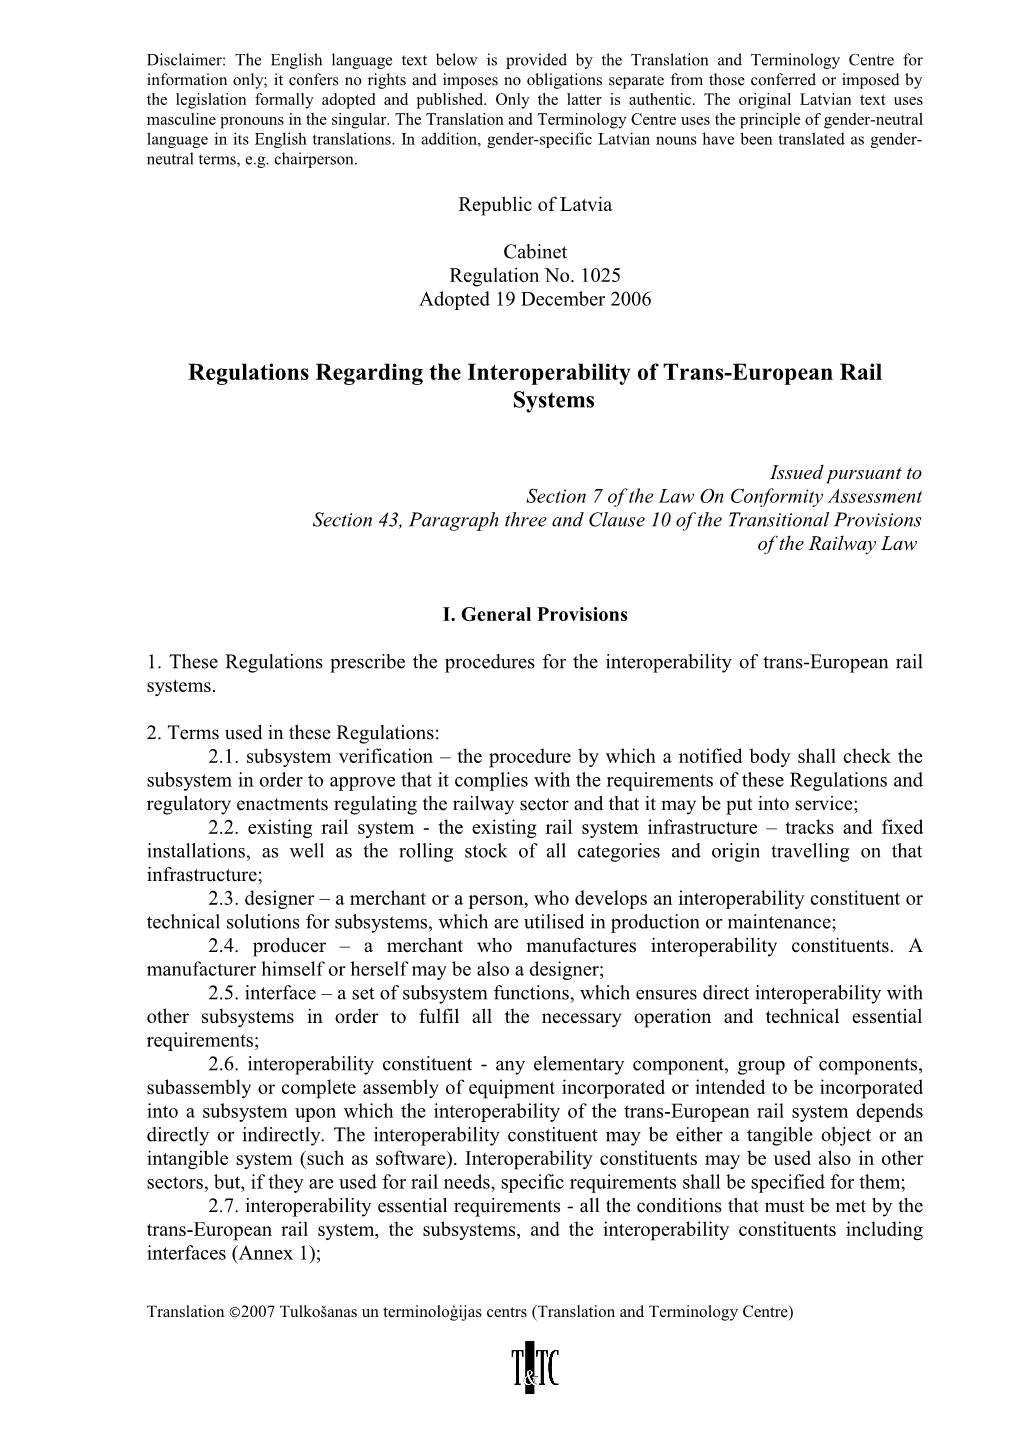 Regulations Regarding the Interoperability of Trans-European Rail Systems